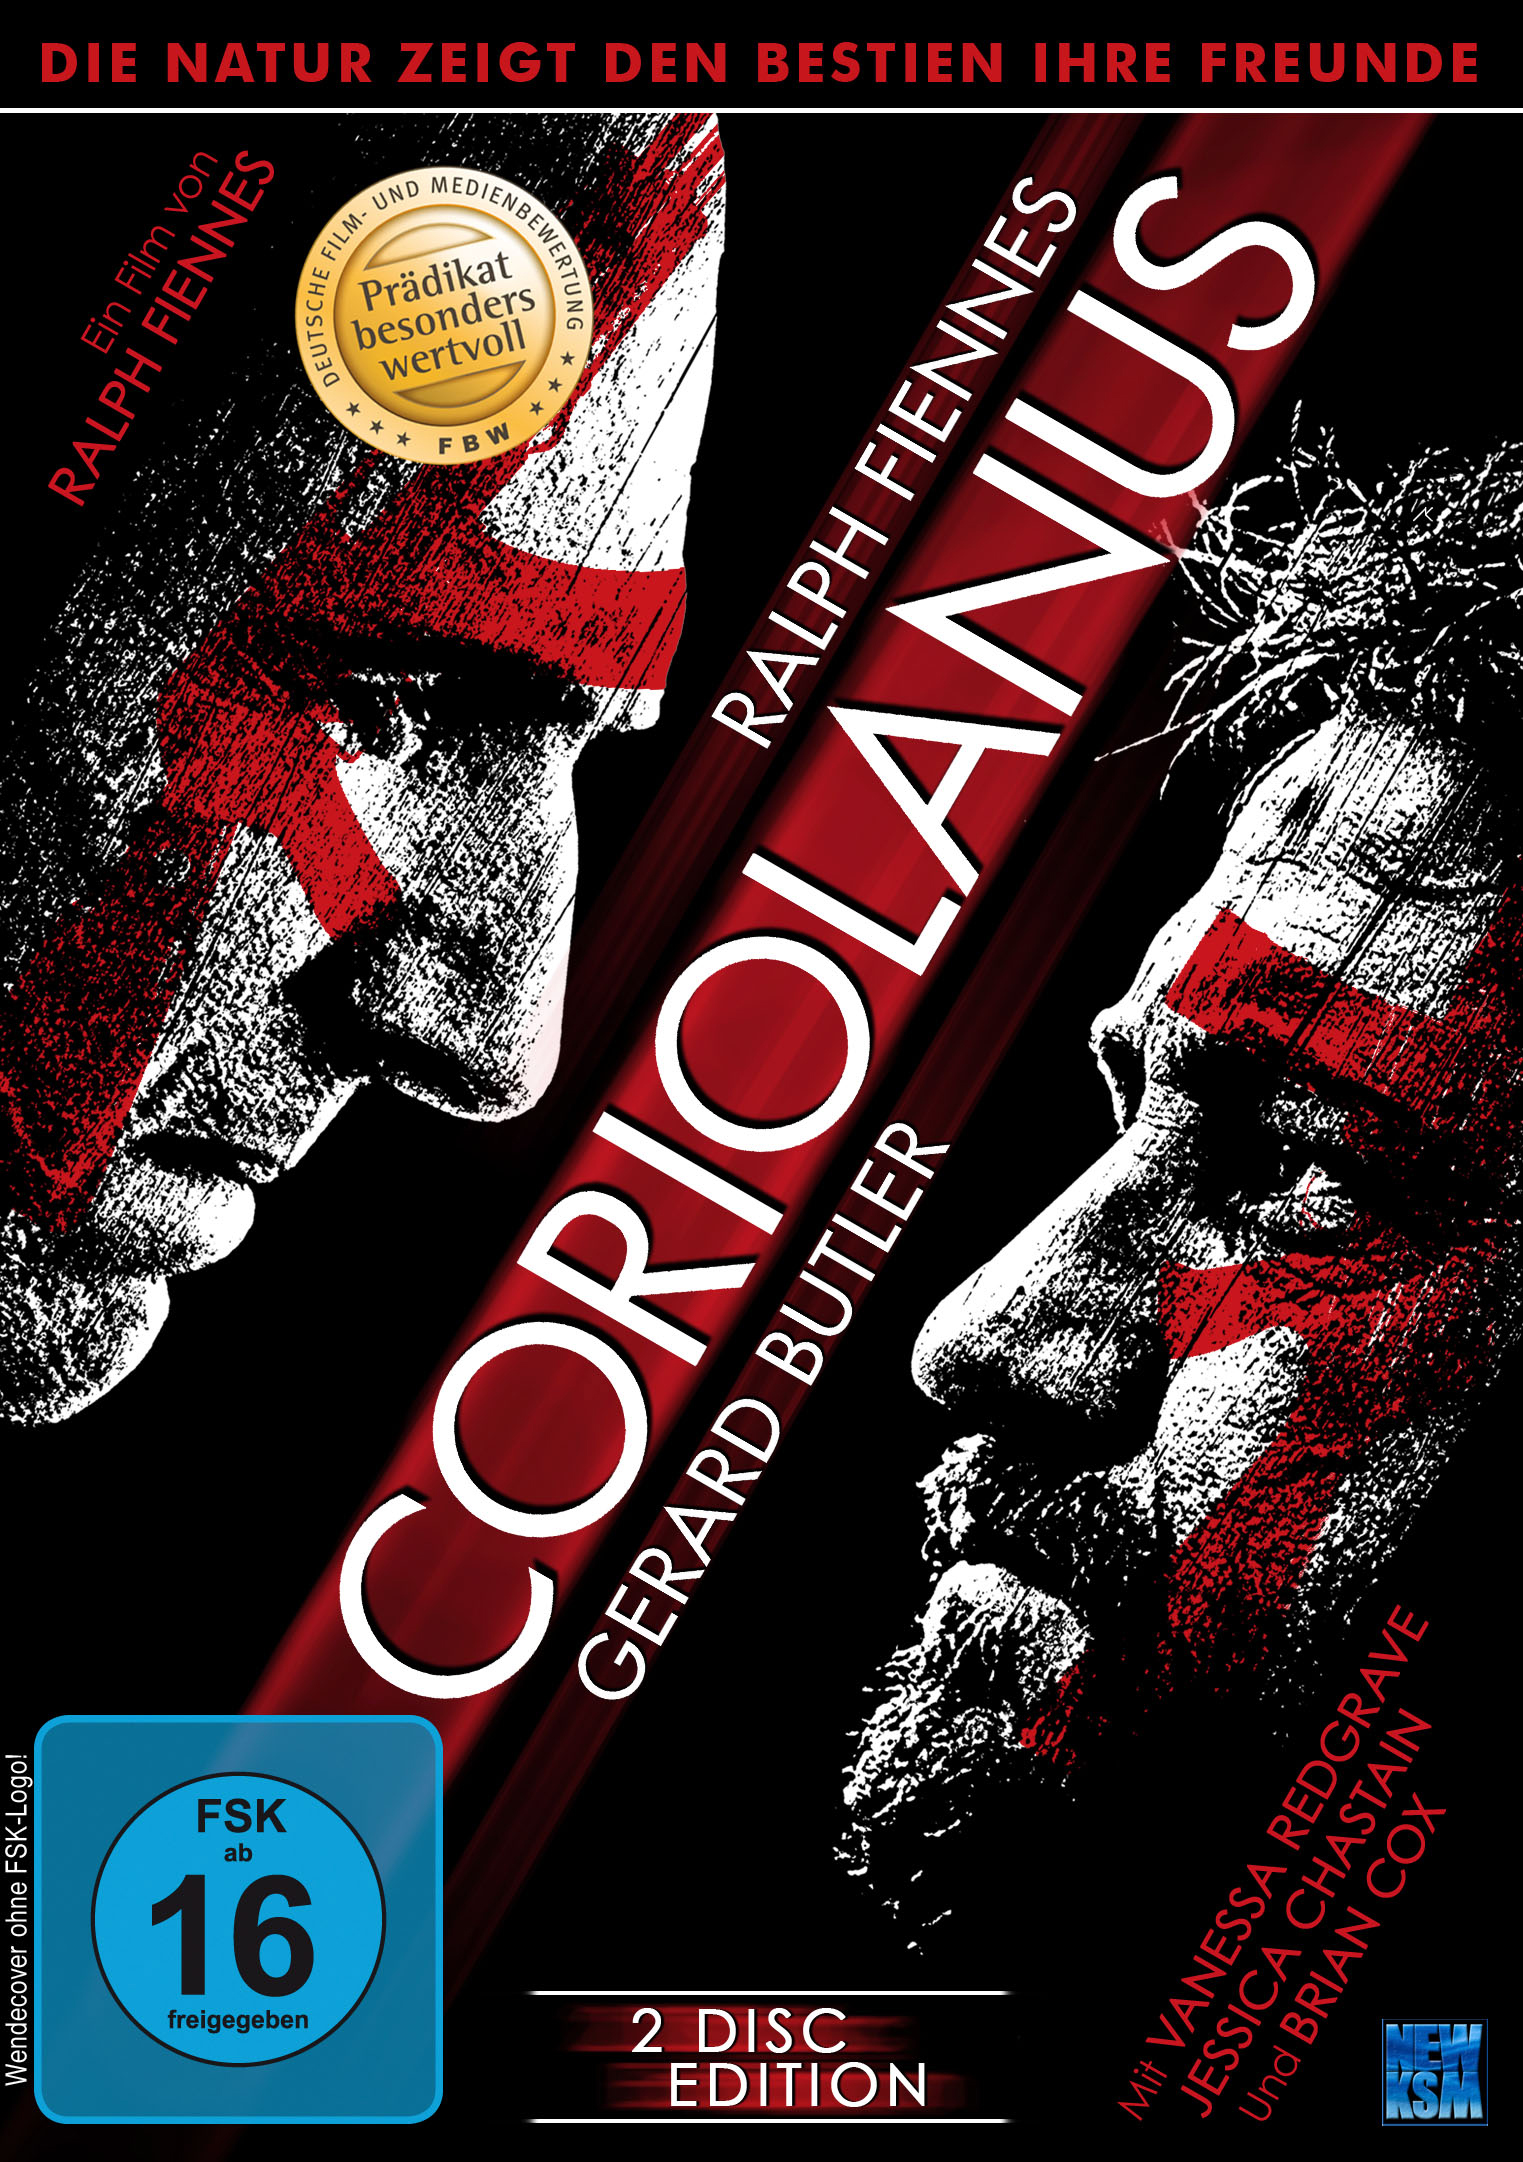 Coriolanus - War Enemy of DVD